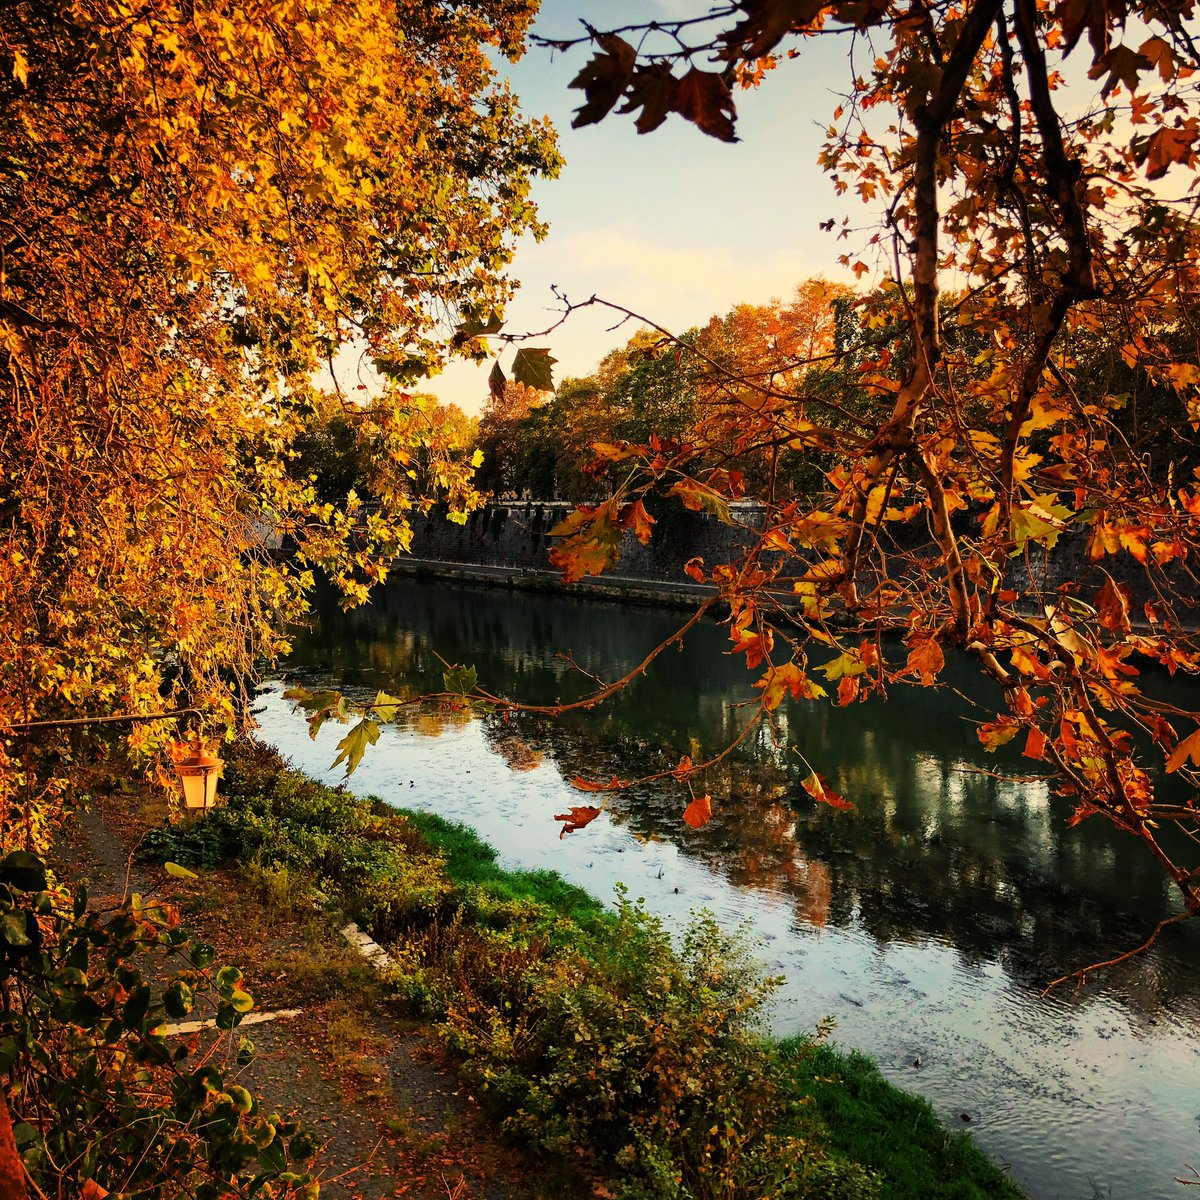 L’Autunno romano🧡
#autumninrome #lungotevere #foliage #autumnvibes #myrome #landscapephotography #urbanphotography